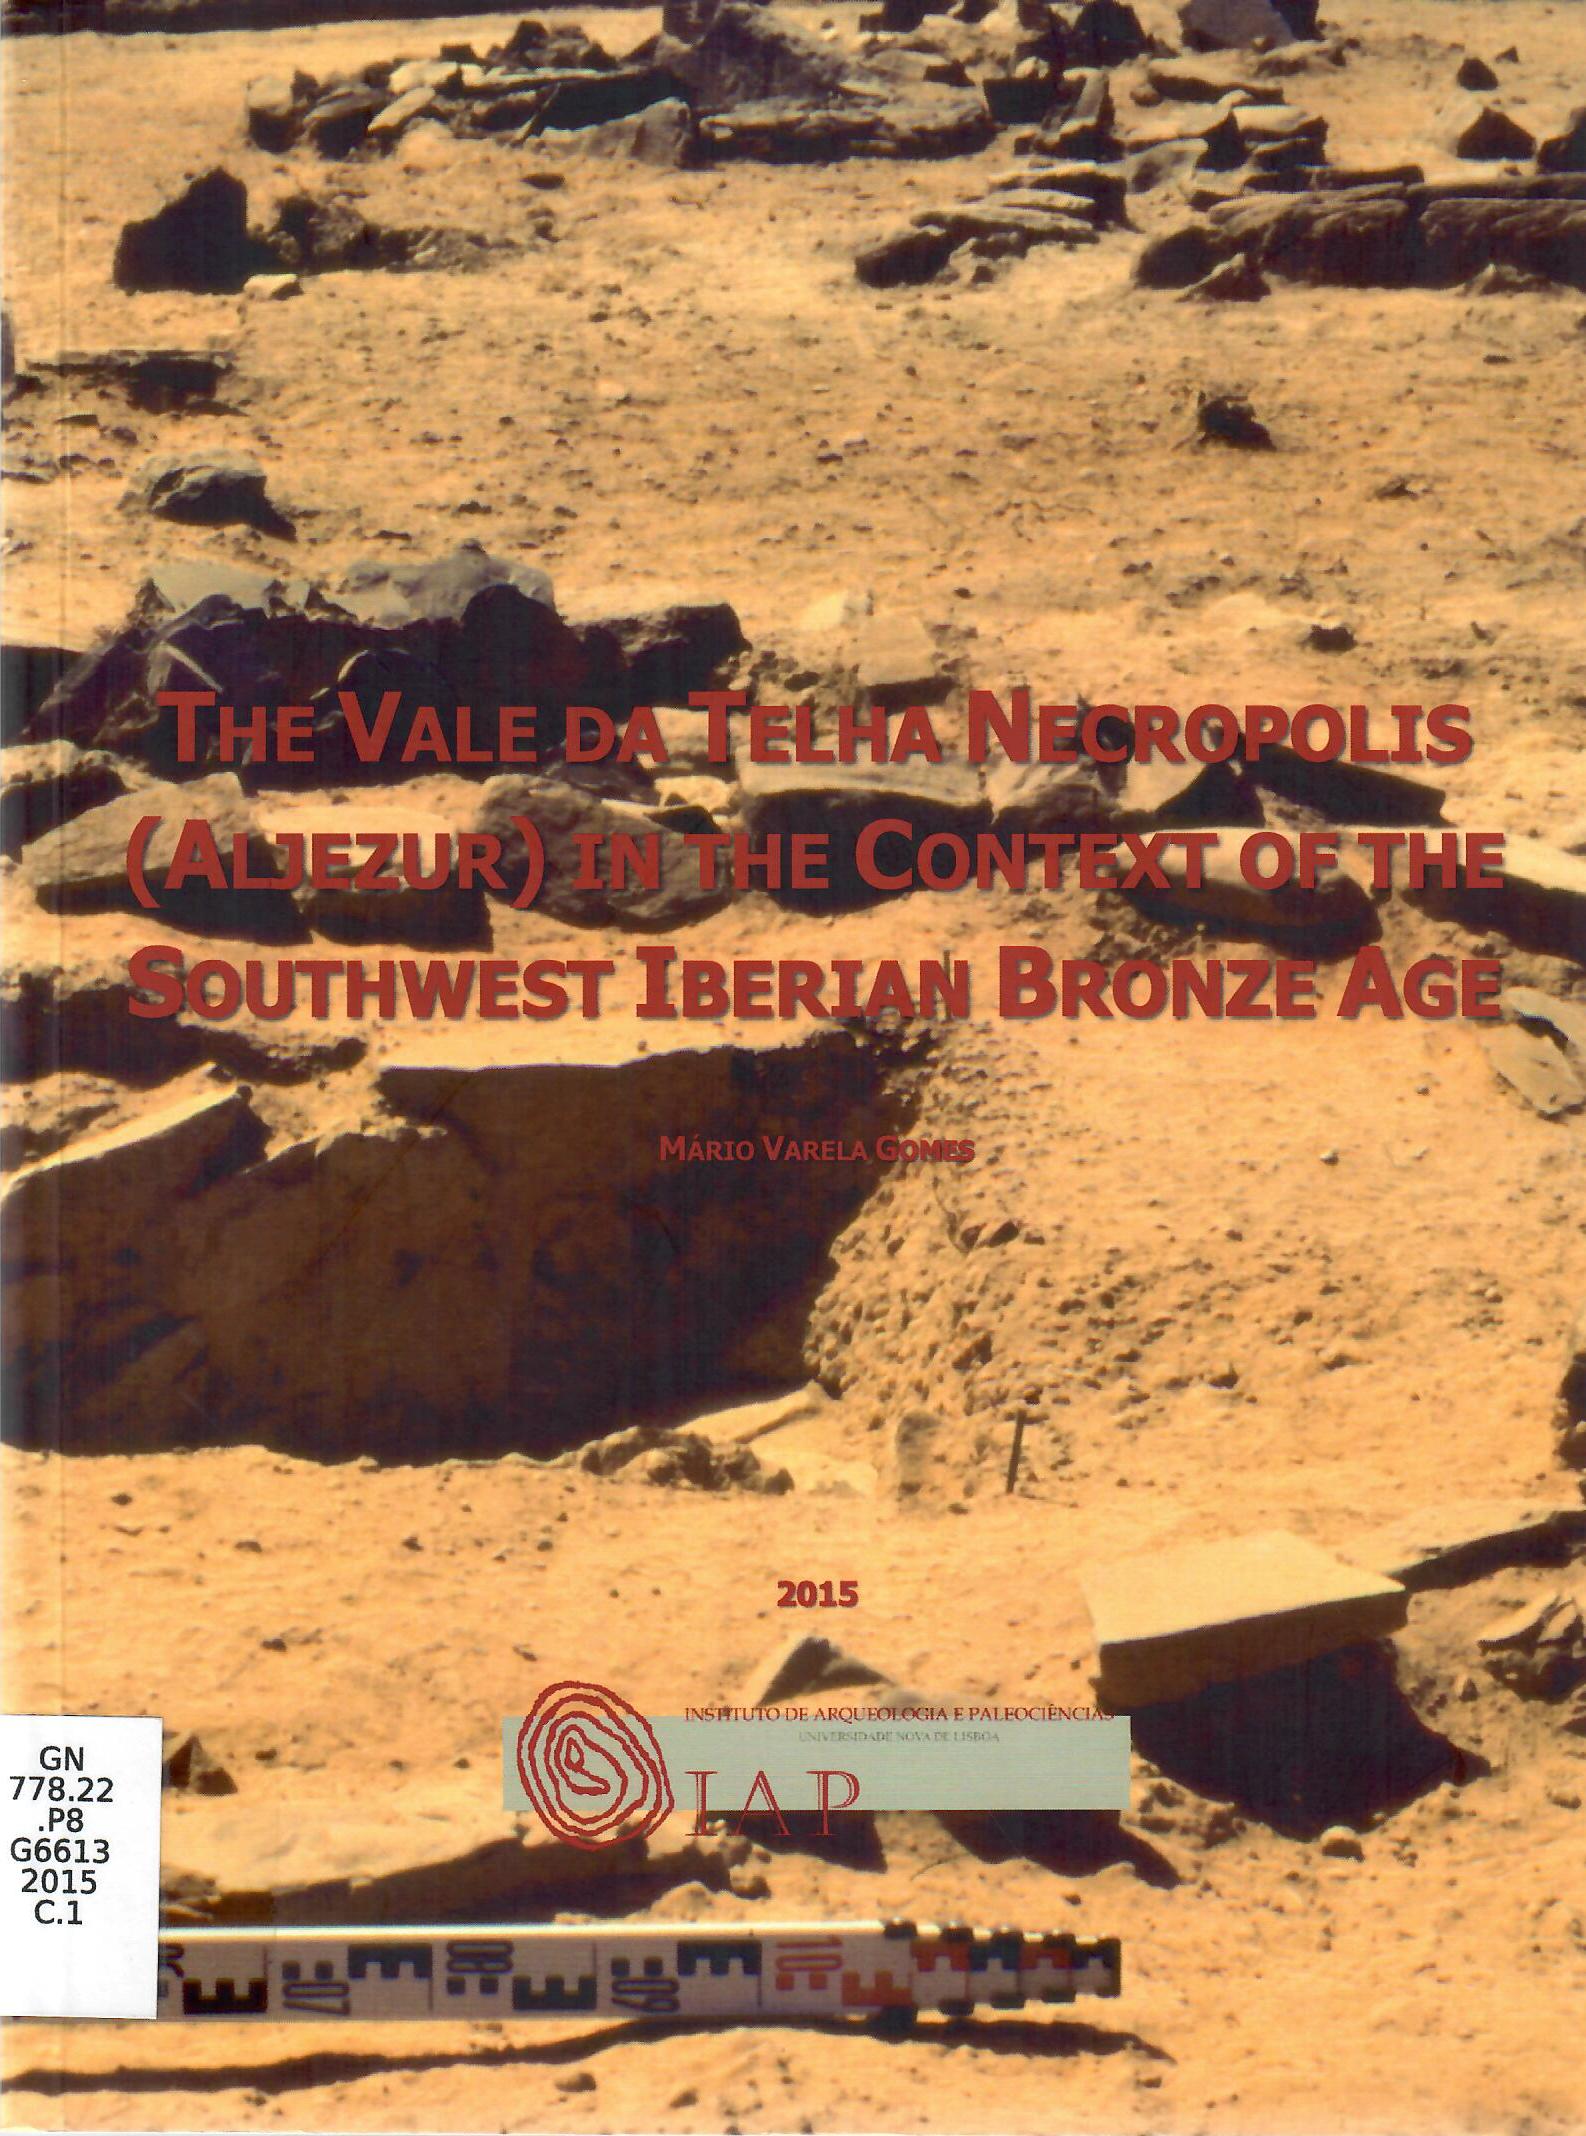 THE VALED DA TEHA NECROPOLIS ( ALJEZUR ) IN CONTEXT OF THE SOUTHWEST IBERIAN BRONZE AGE